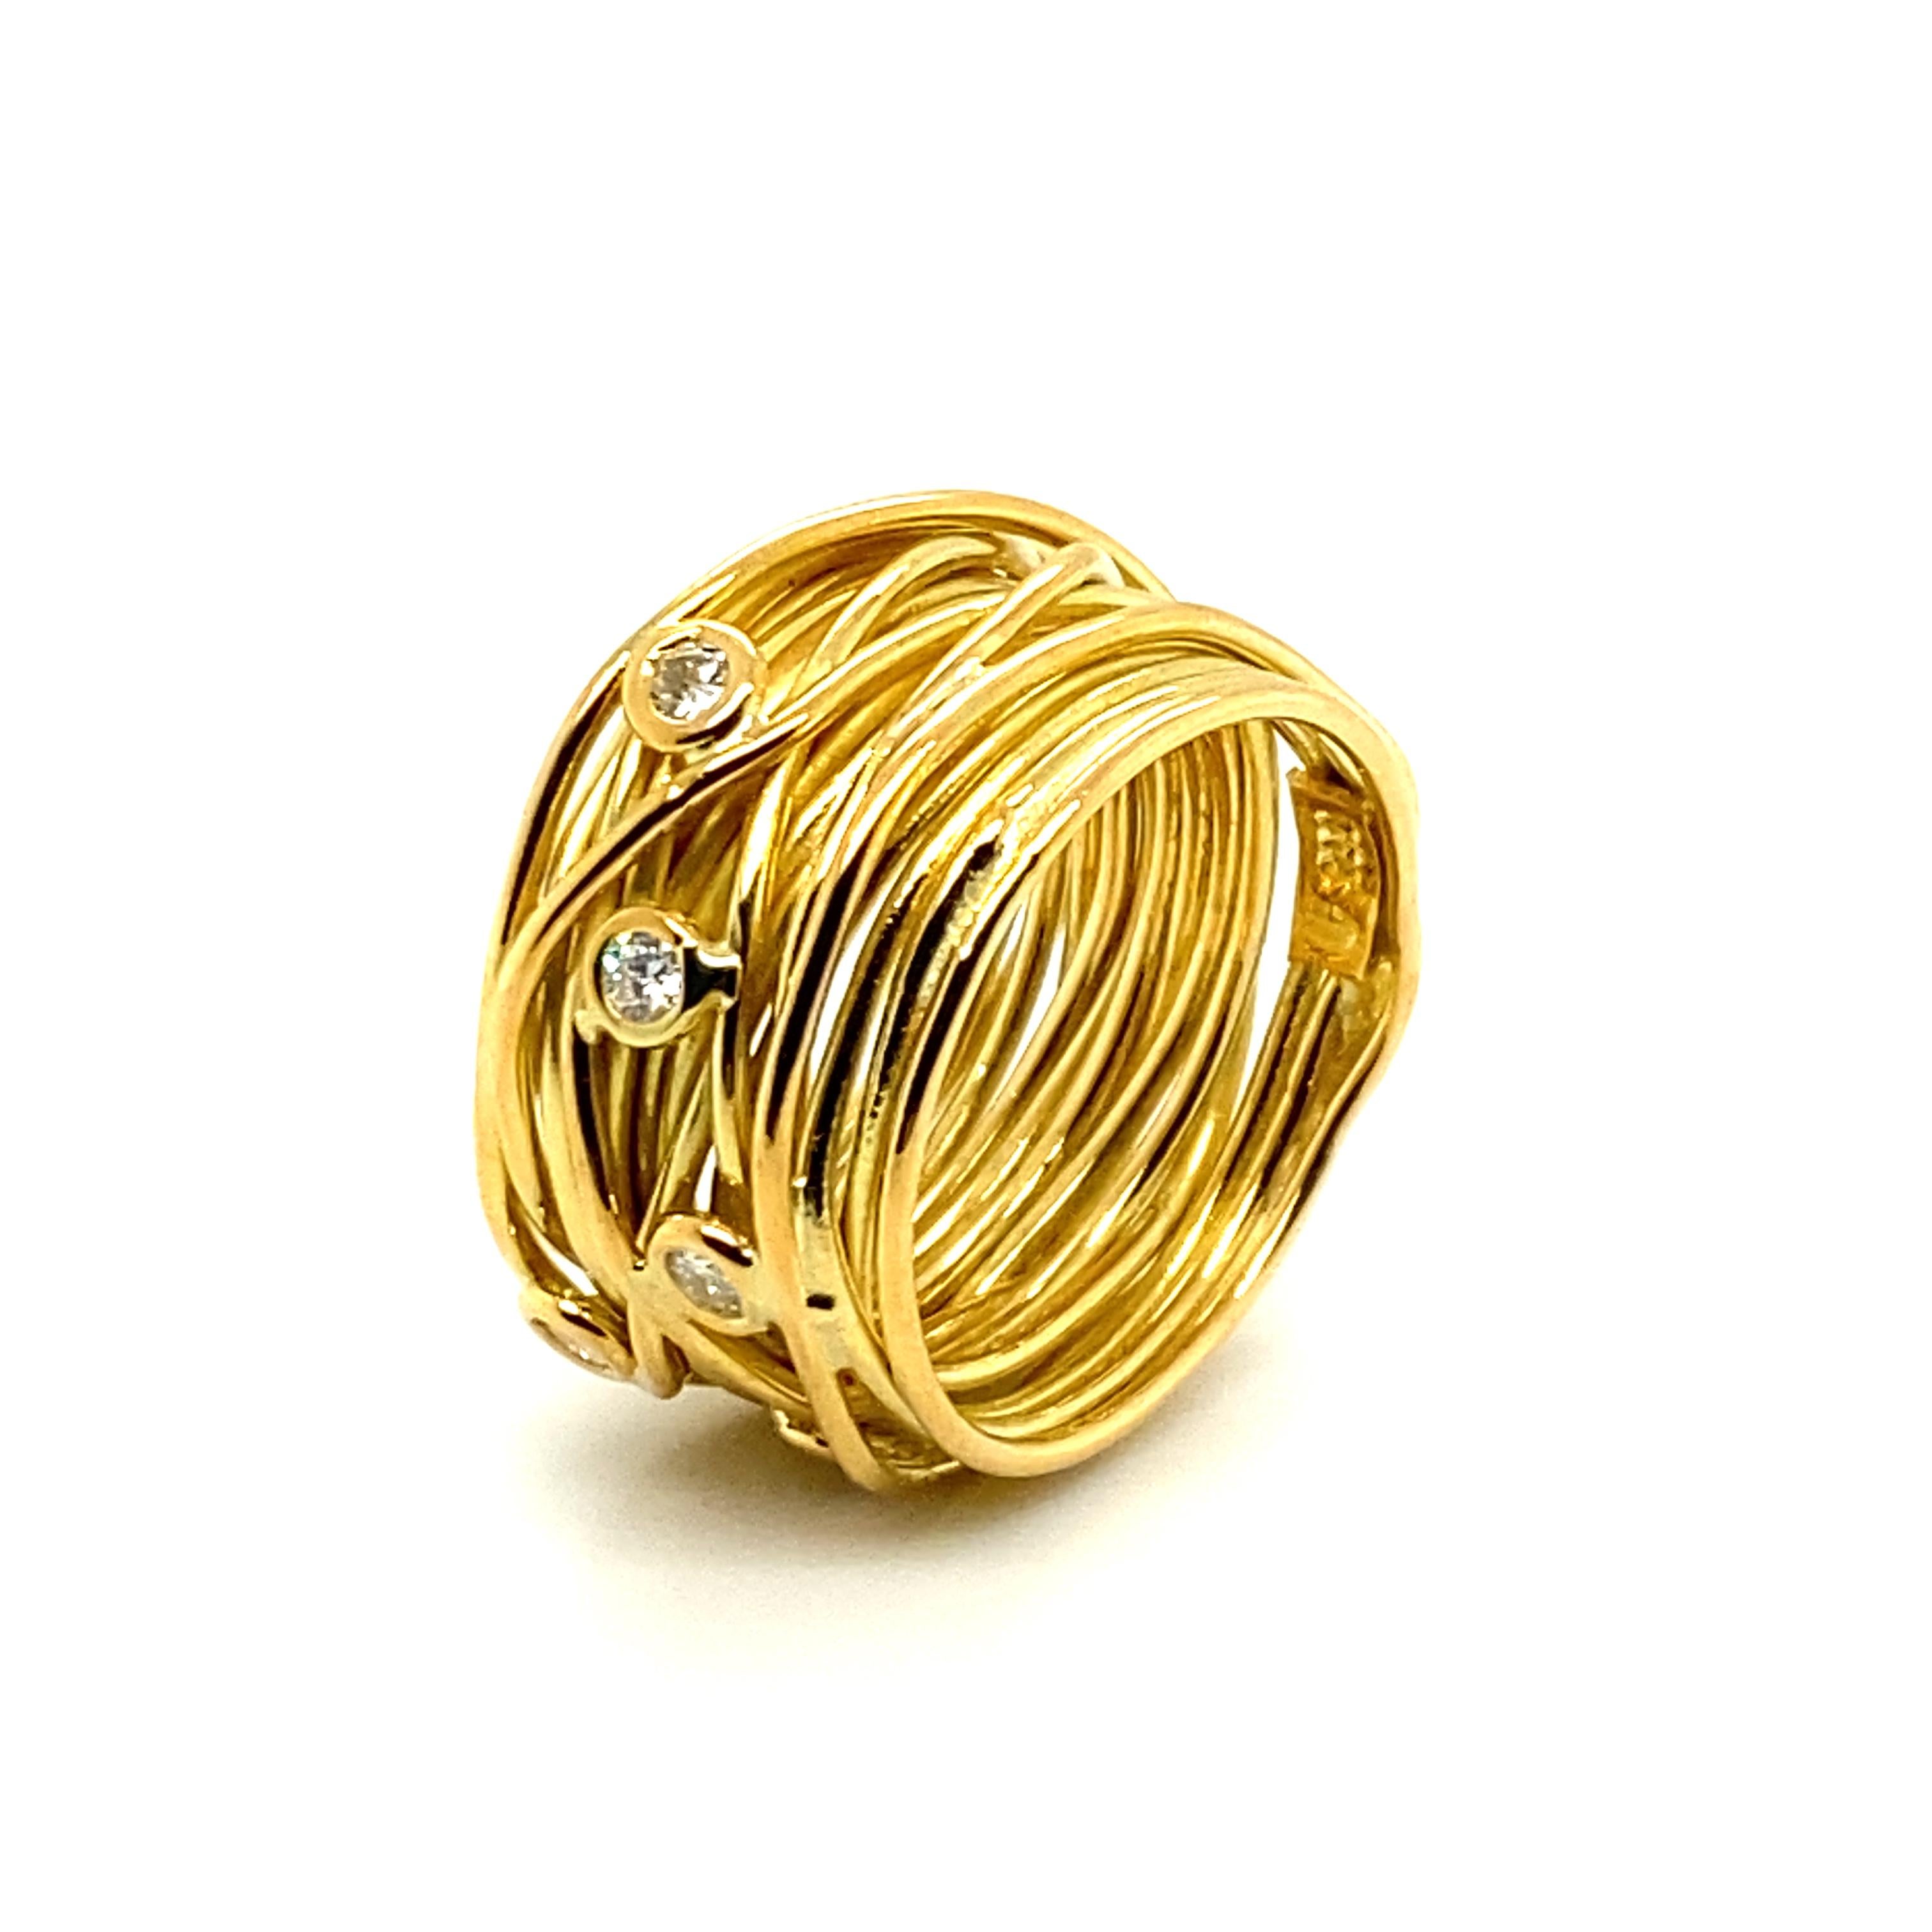 Iconic Diamond Bird's Nest Ring by Devon in 18 Karat Yellow Gold For Sale 1